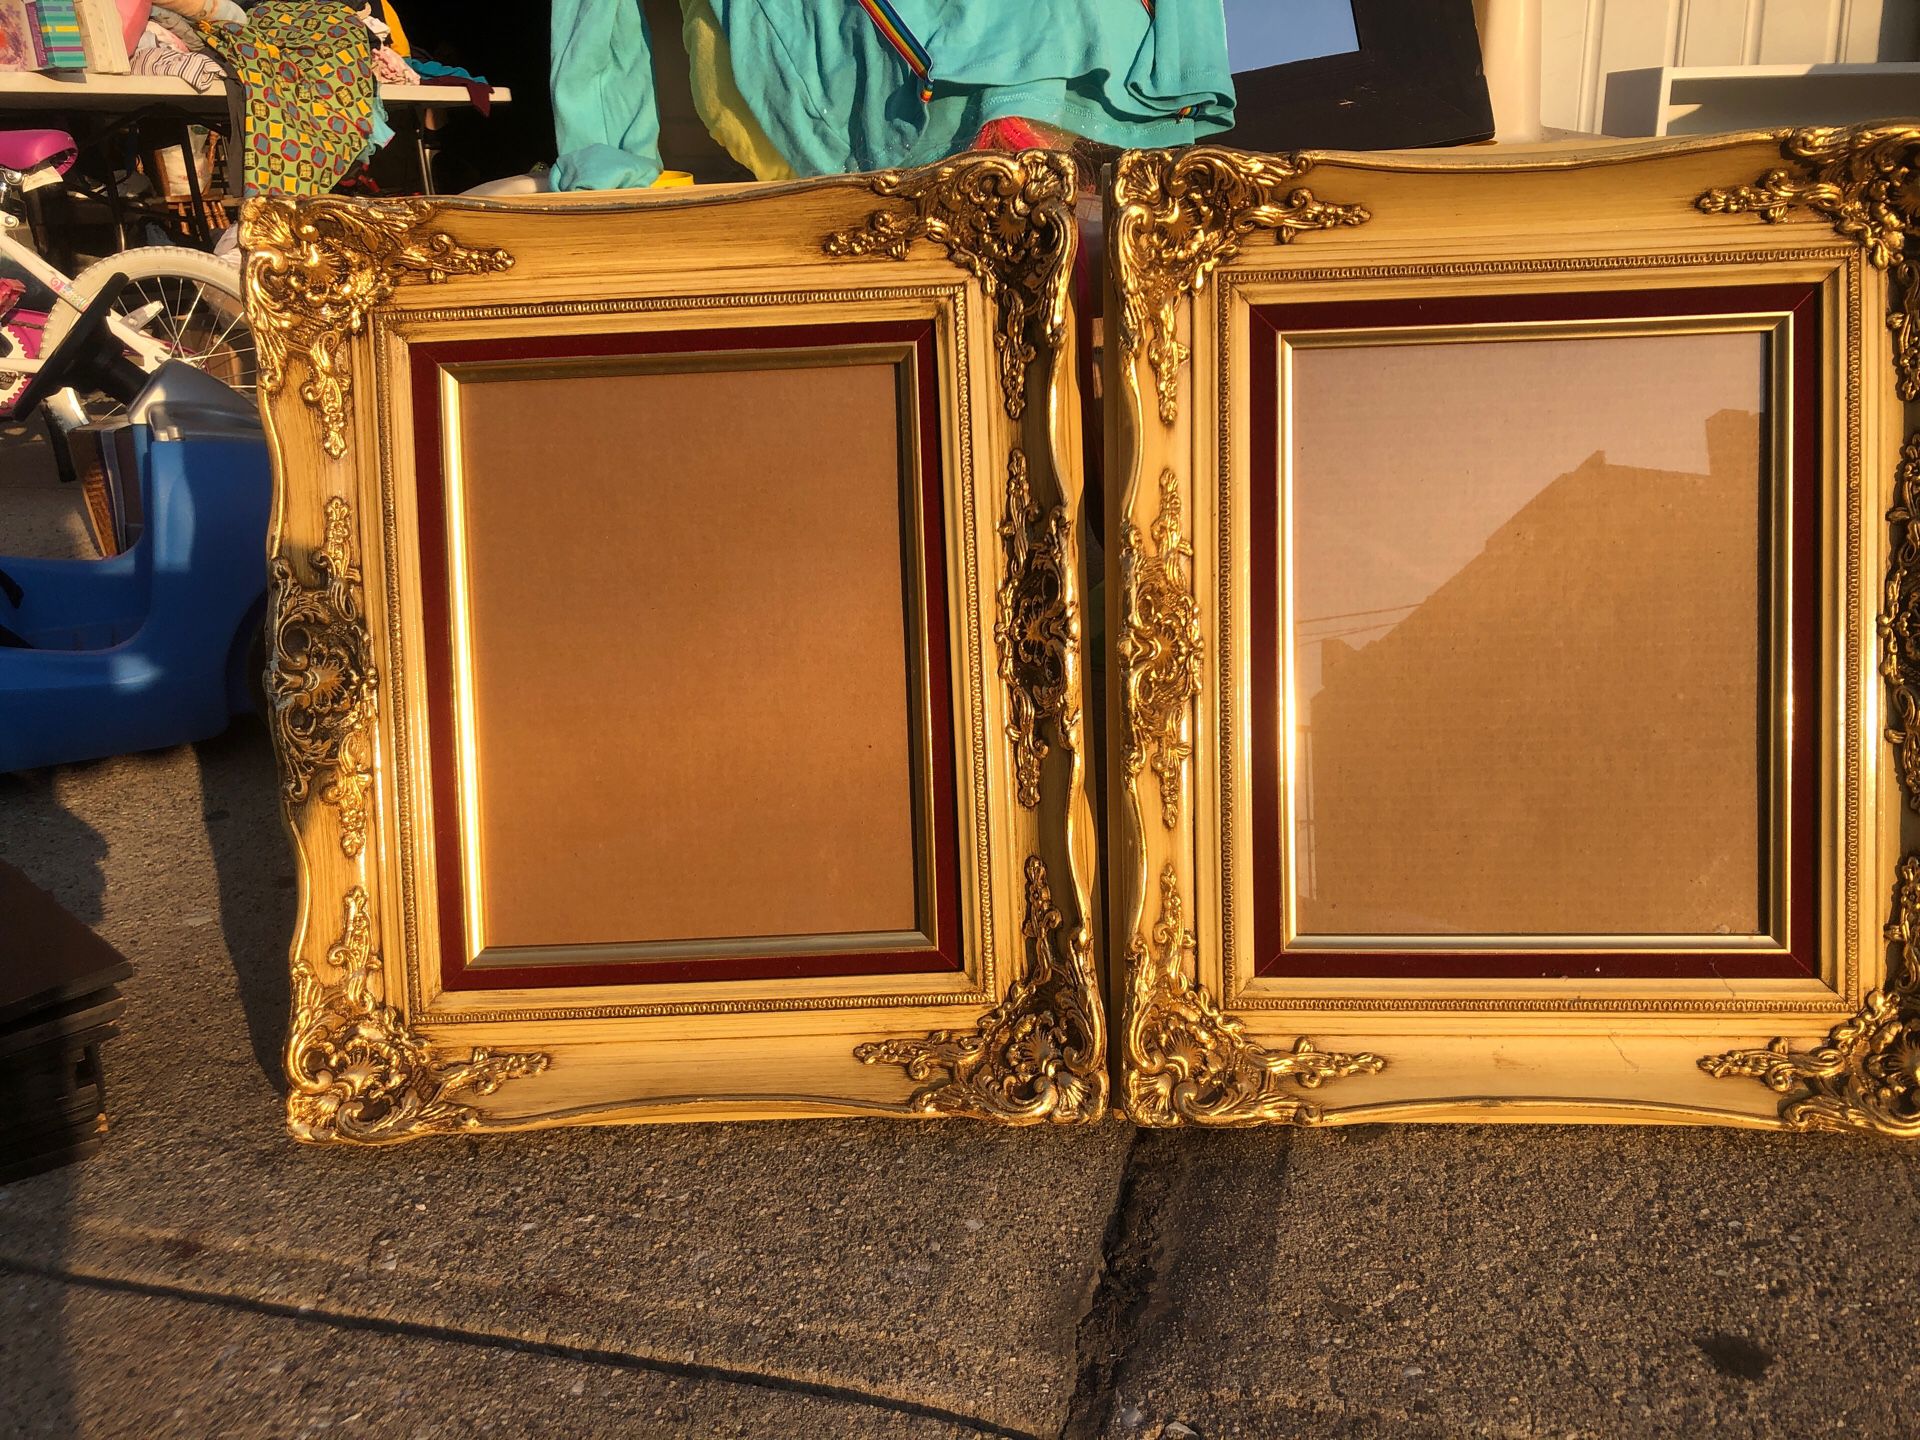 Two Custom Made Frames for 11x14” art or photos